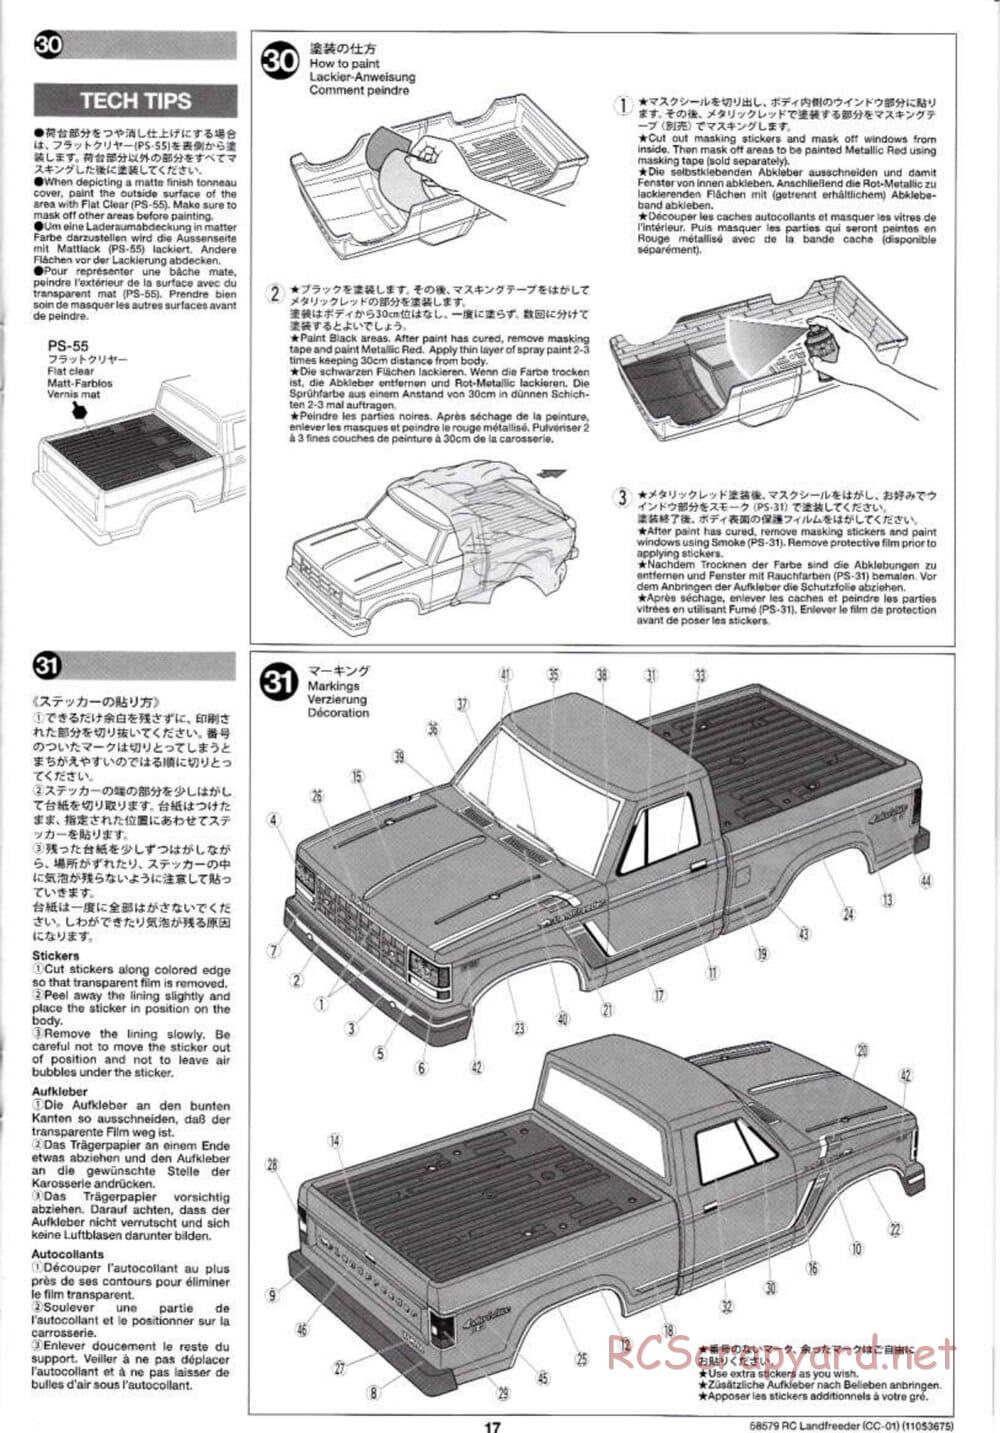 Tamiya - LandFreeder - CC-01 Chassis - Manual - Page 17